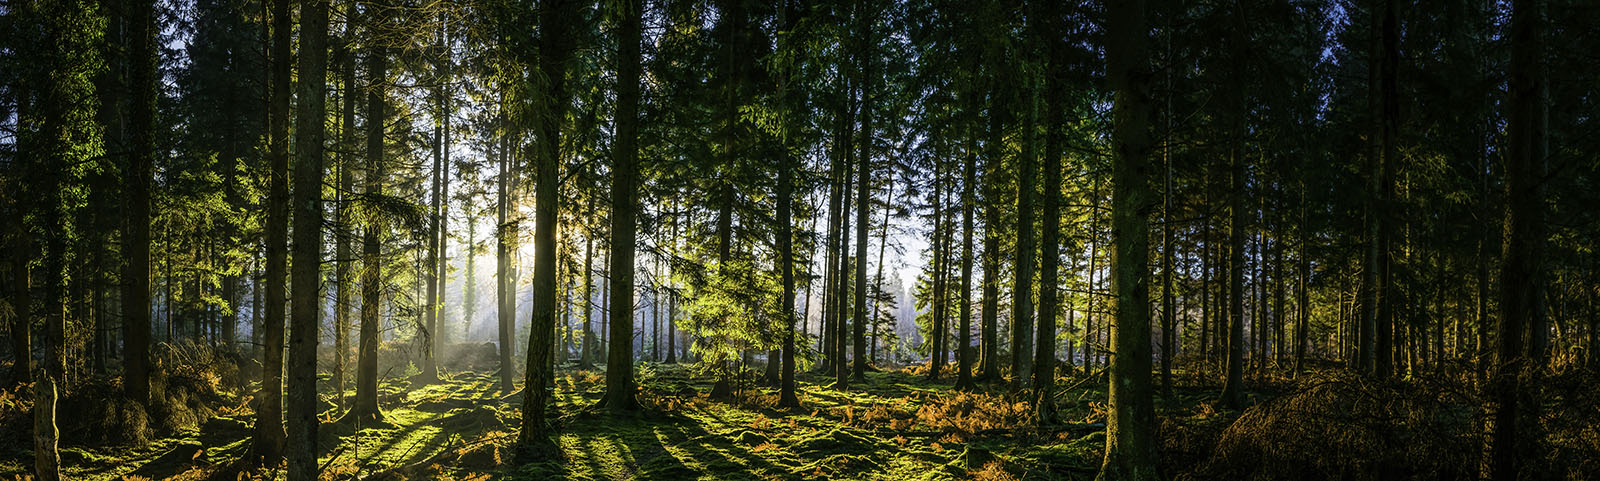 Sunlight shining through coniferous forest